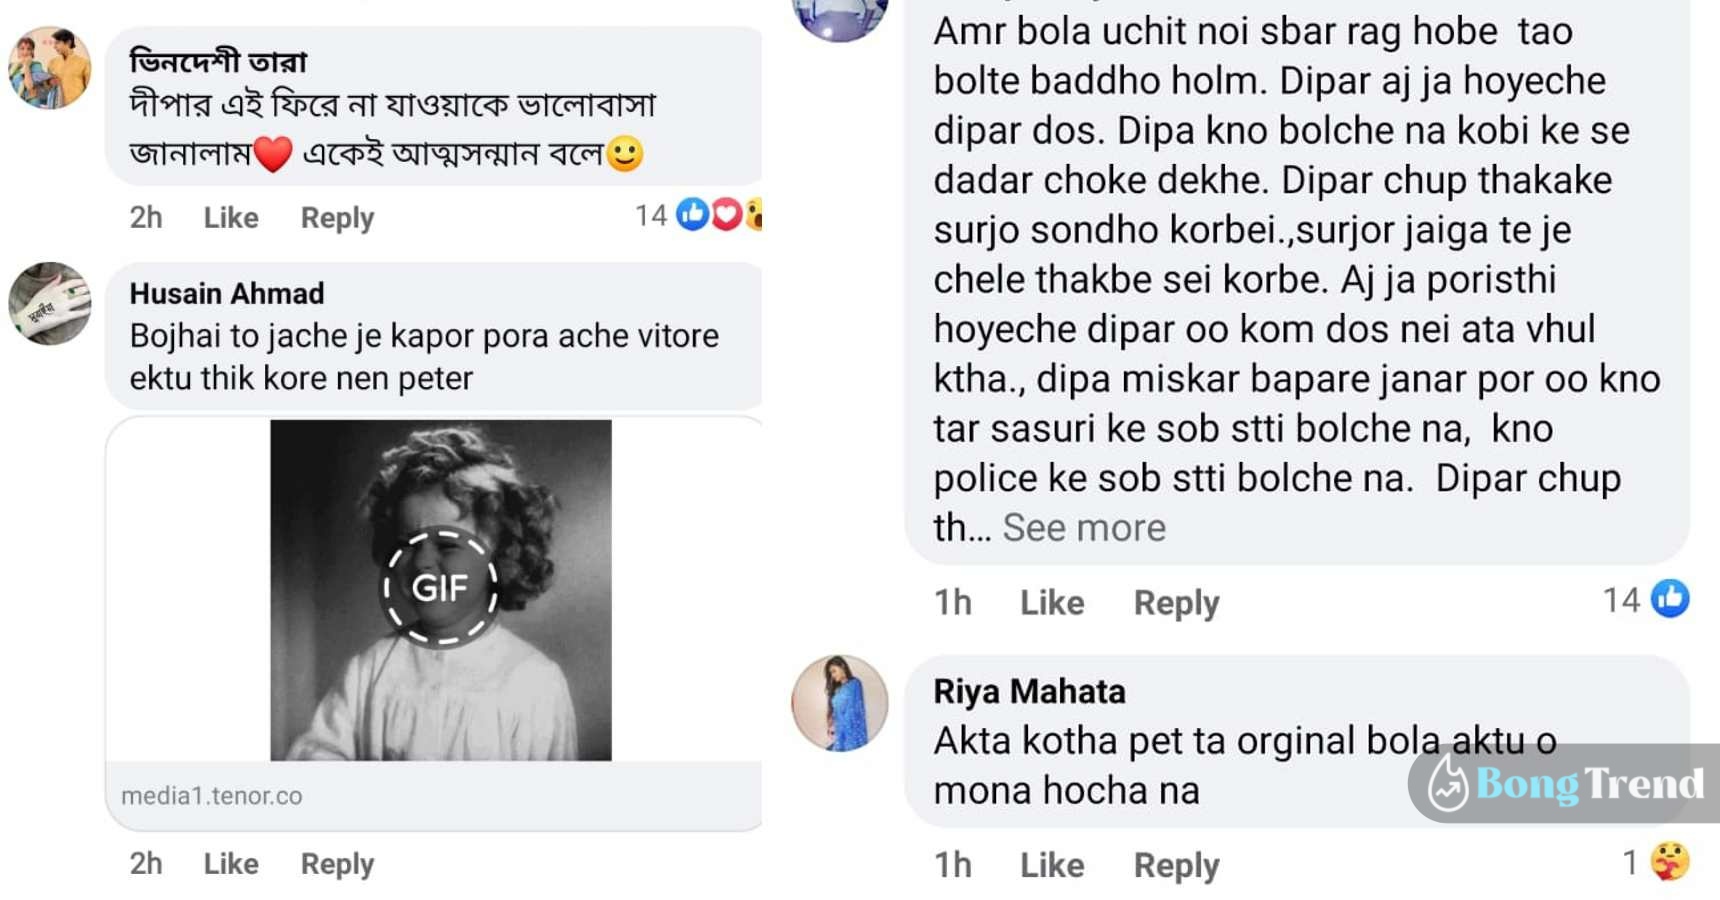 Audience praise Deepa's Decission on social media